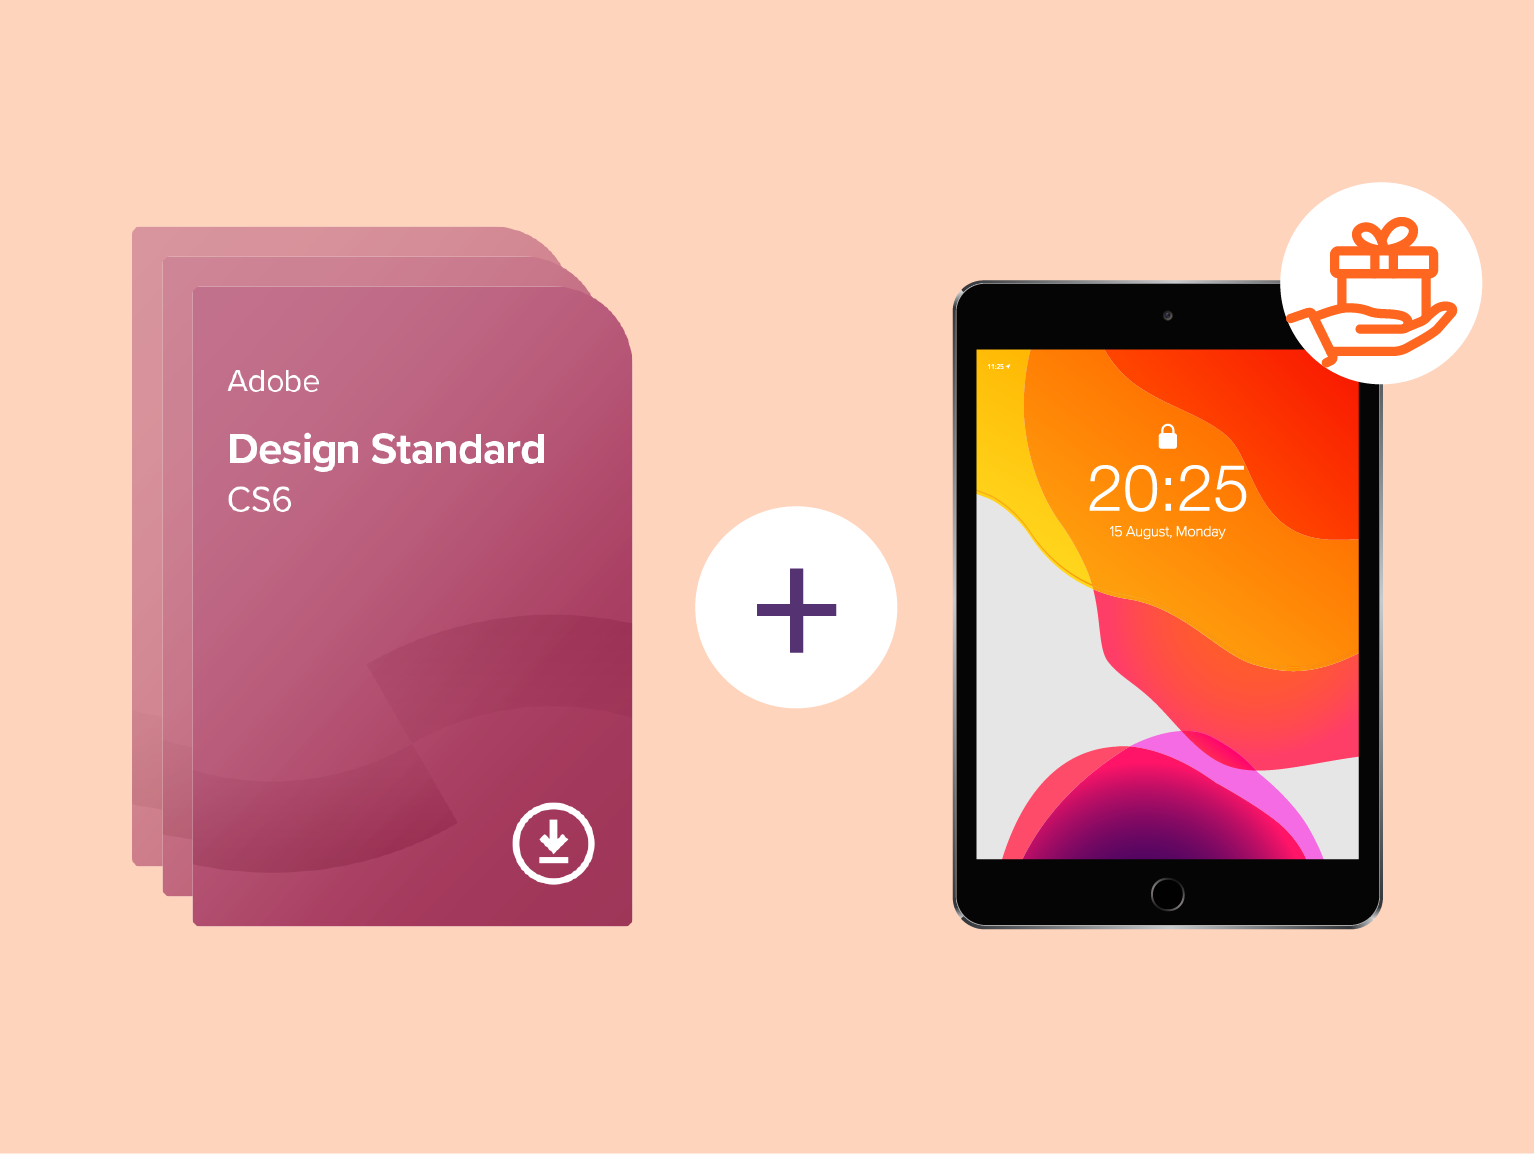 Limited offer: Buy Adobe CS6 Design Standard and get an iPad - Forscope.eu